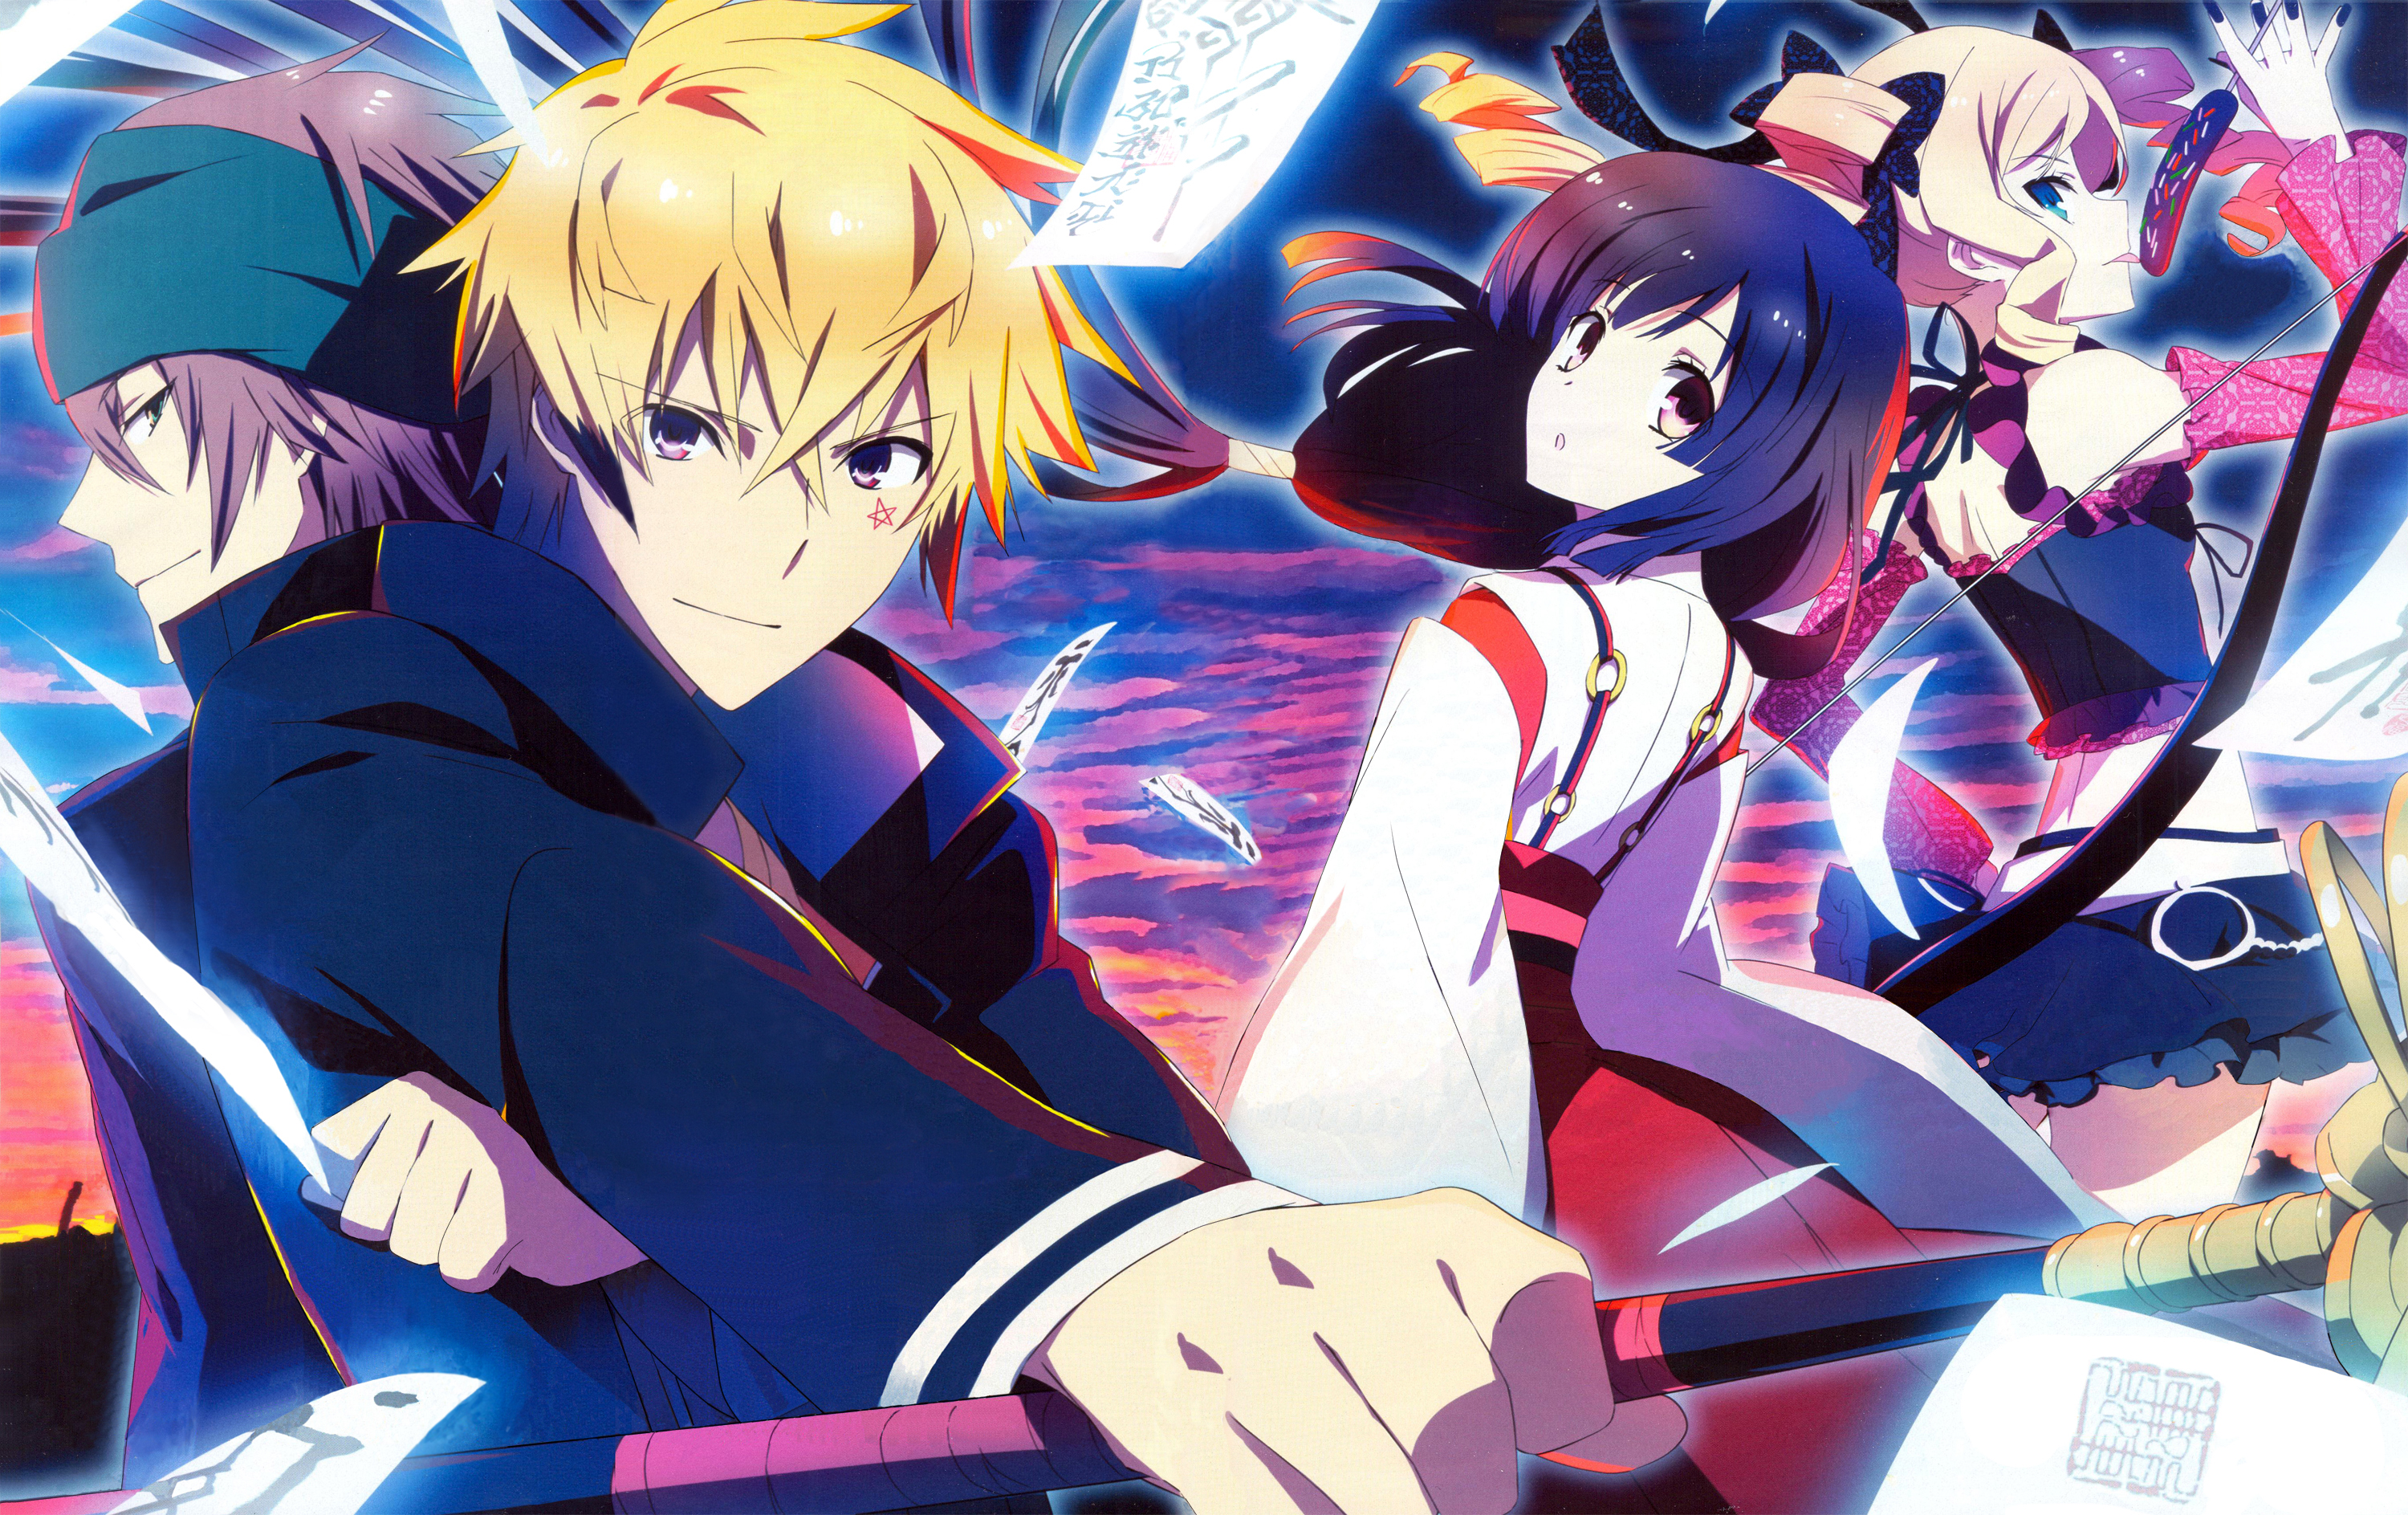 Anime Review: “Tokyo Ravens”